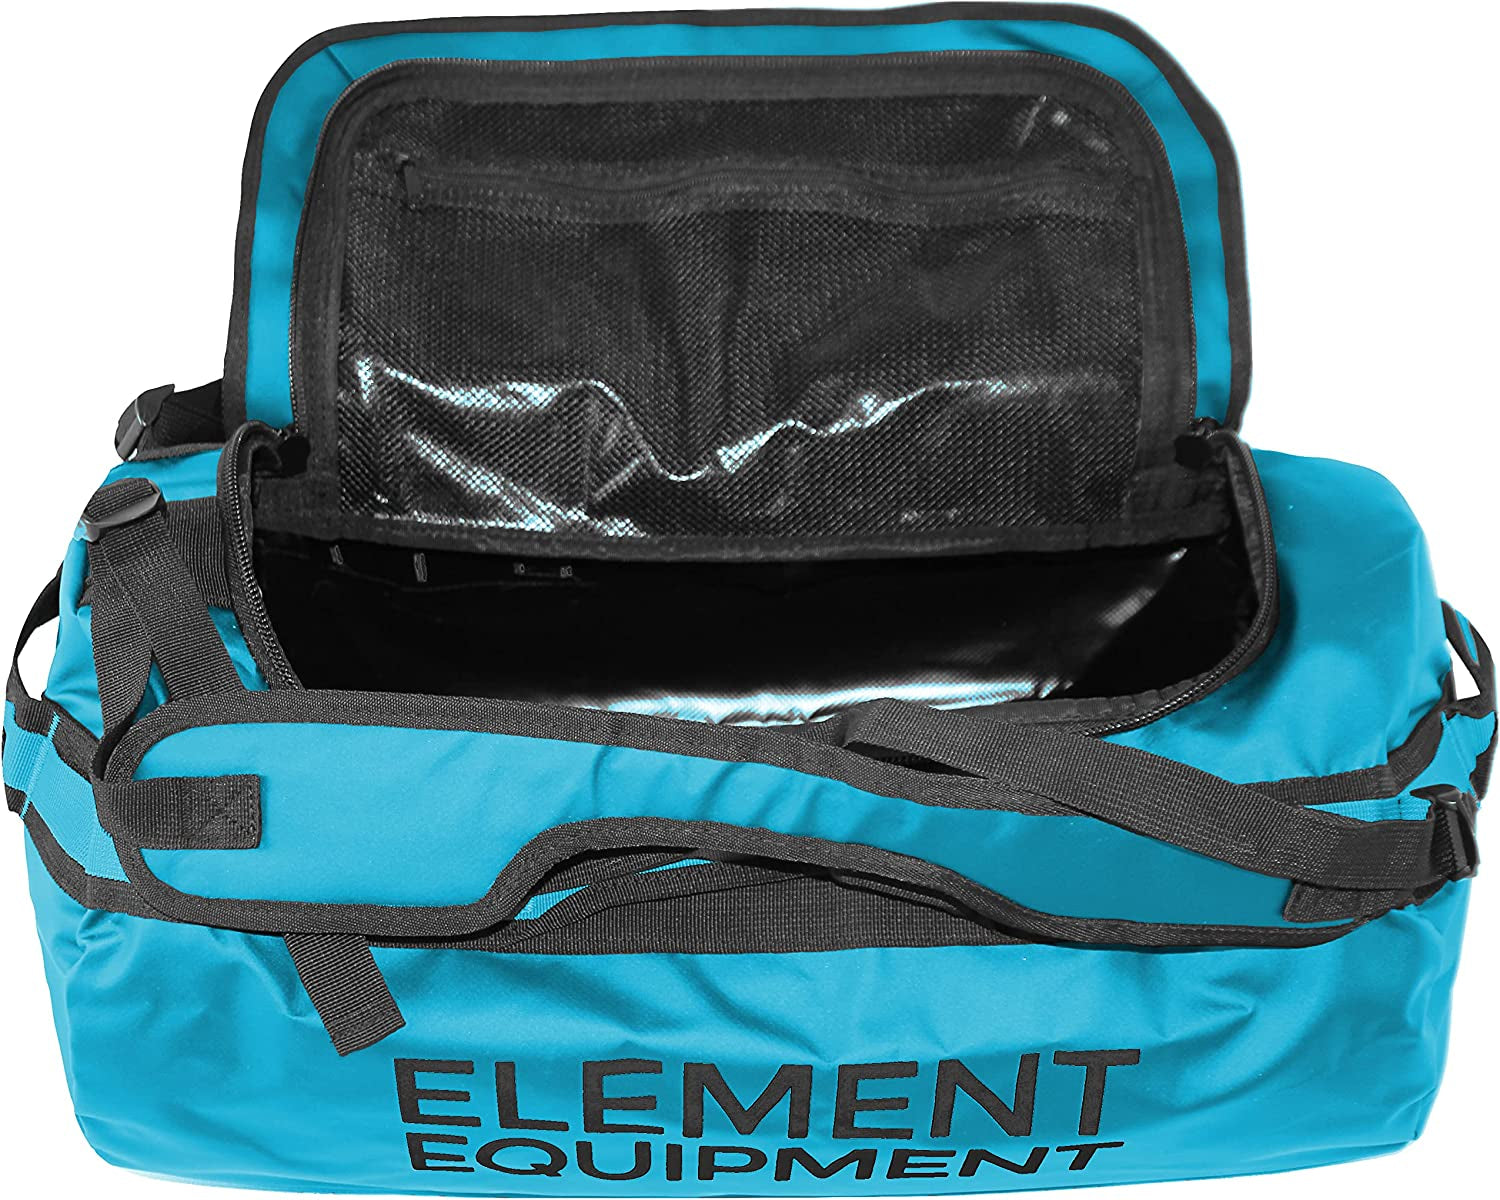 Element Equipment Trailhead Duffel Bag Shoulder Straps Waterproof Teal Small